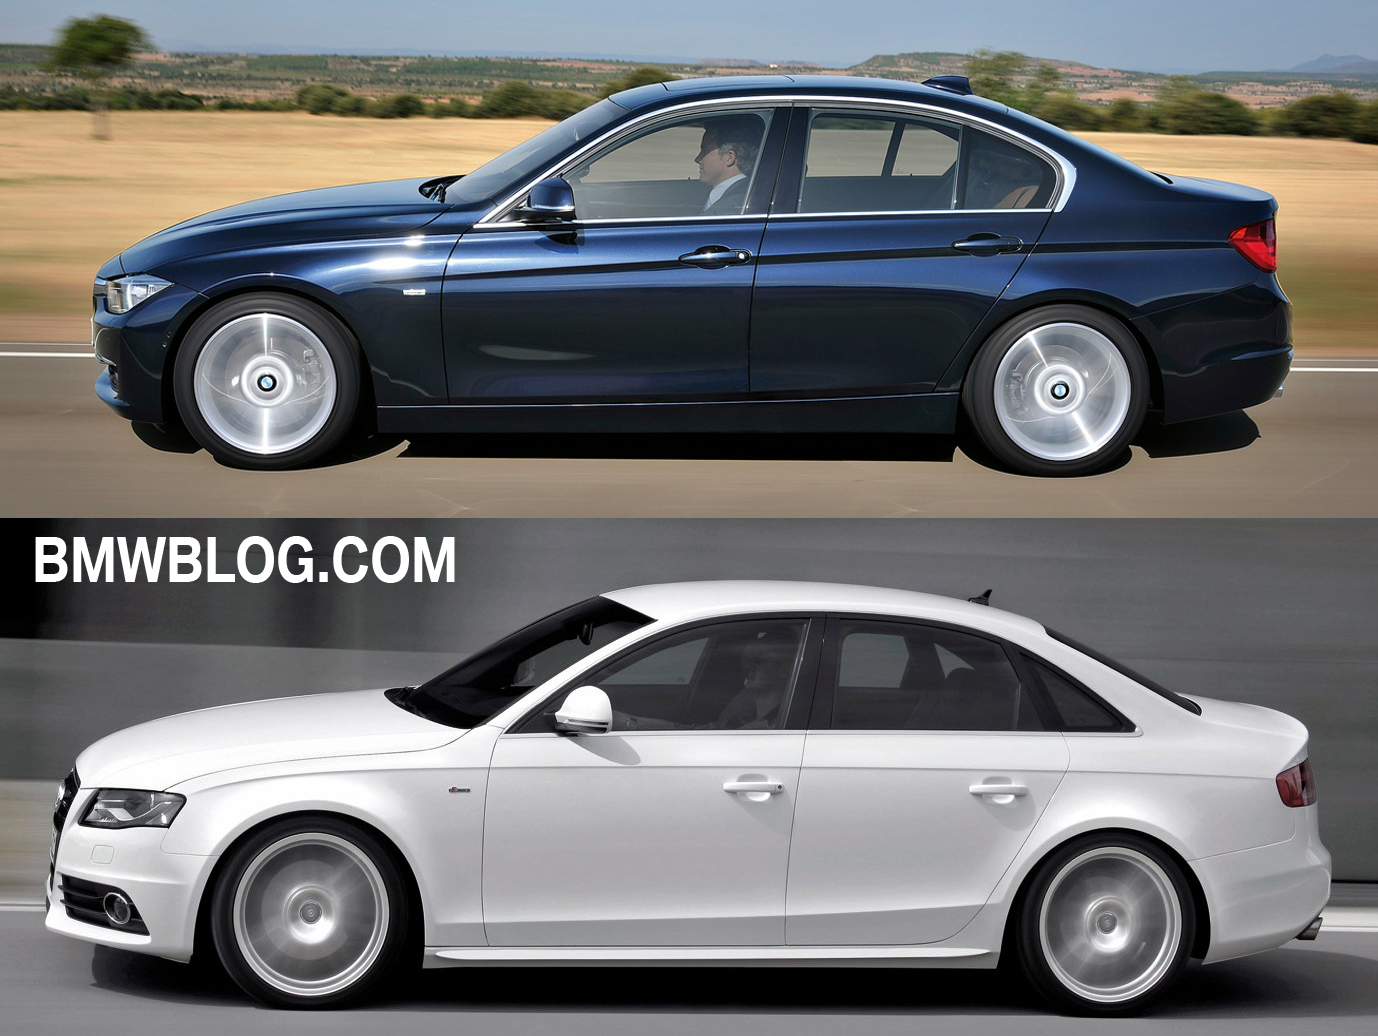 BMW-3-series-vs-audi-a4-photo1.jpg